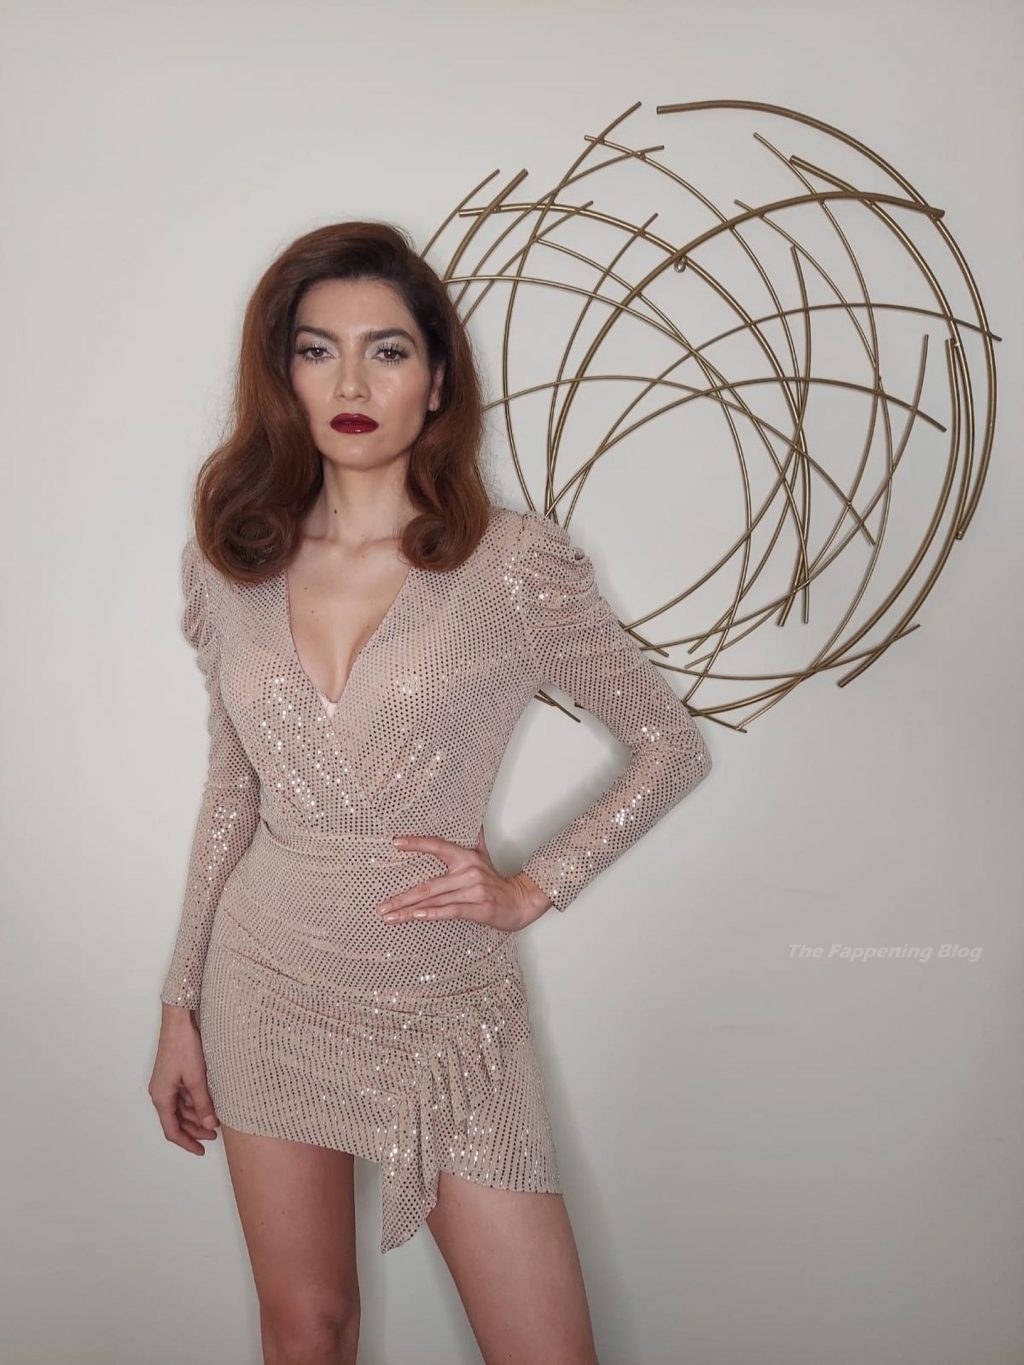 Blanca Blanco Poses in a Sexy Sparkly Dress (7 Photos)